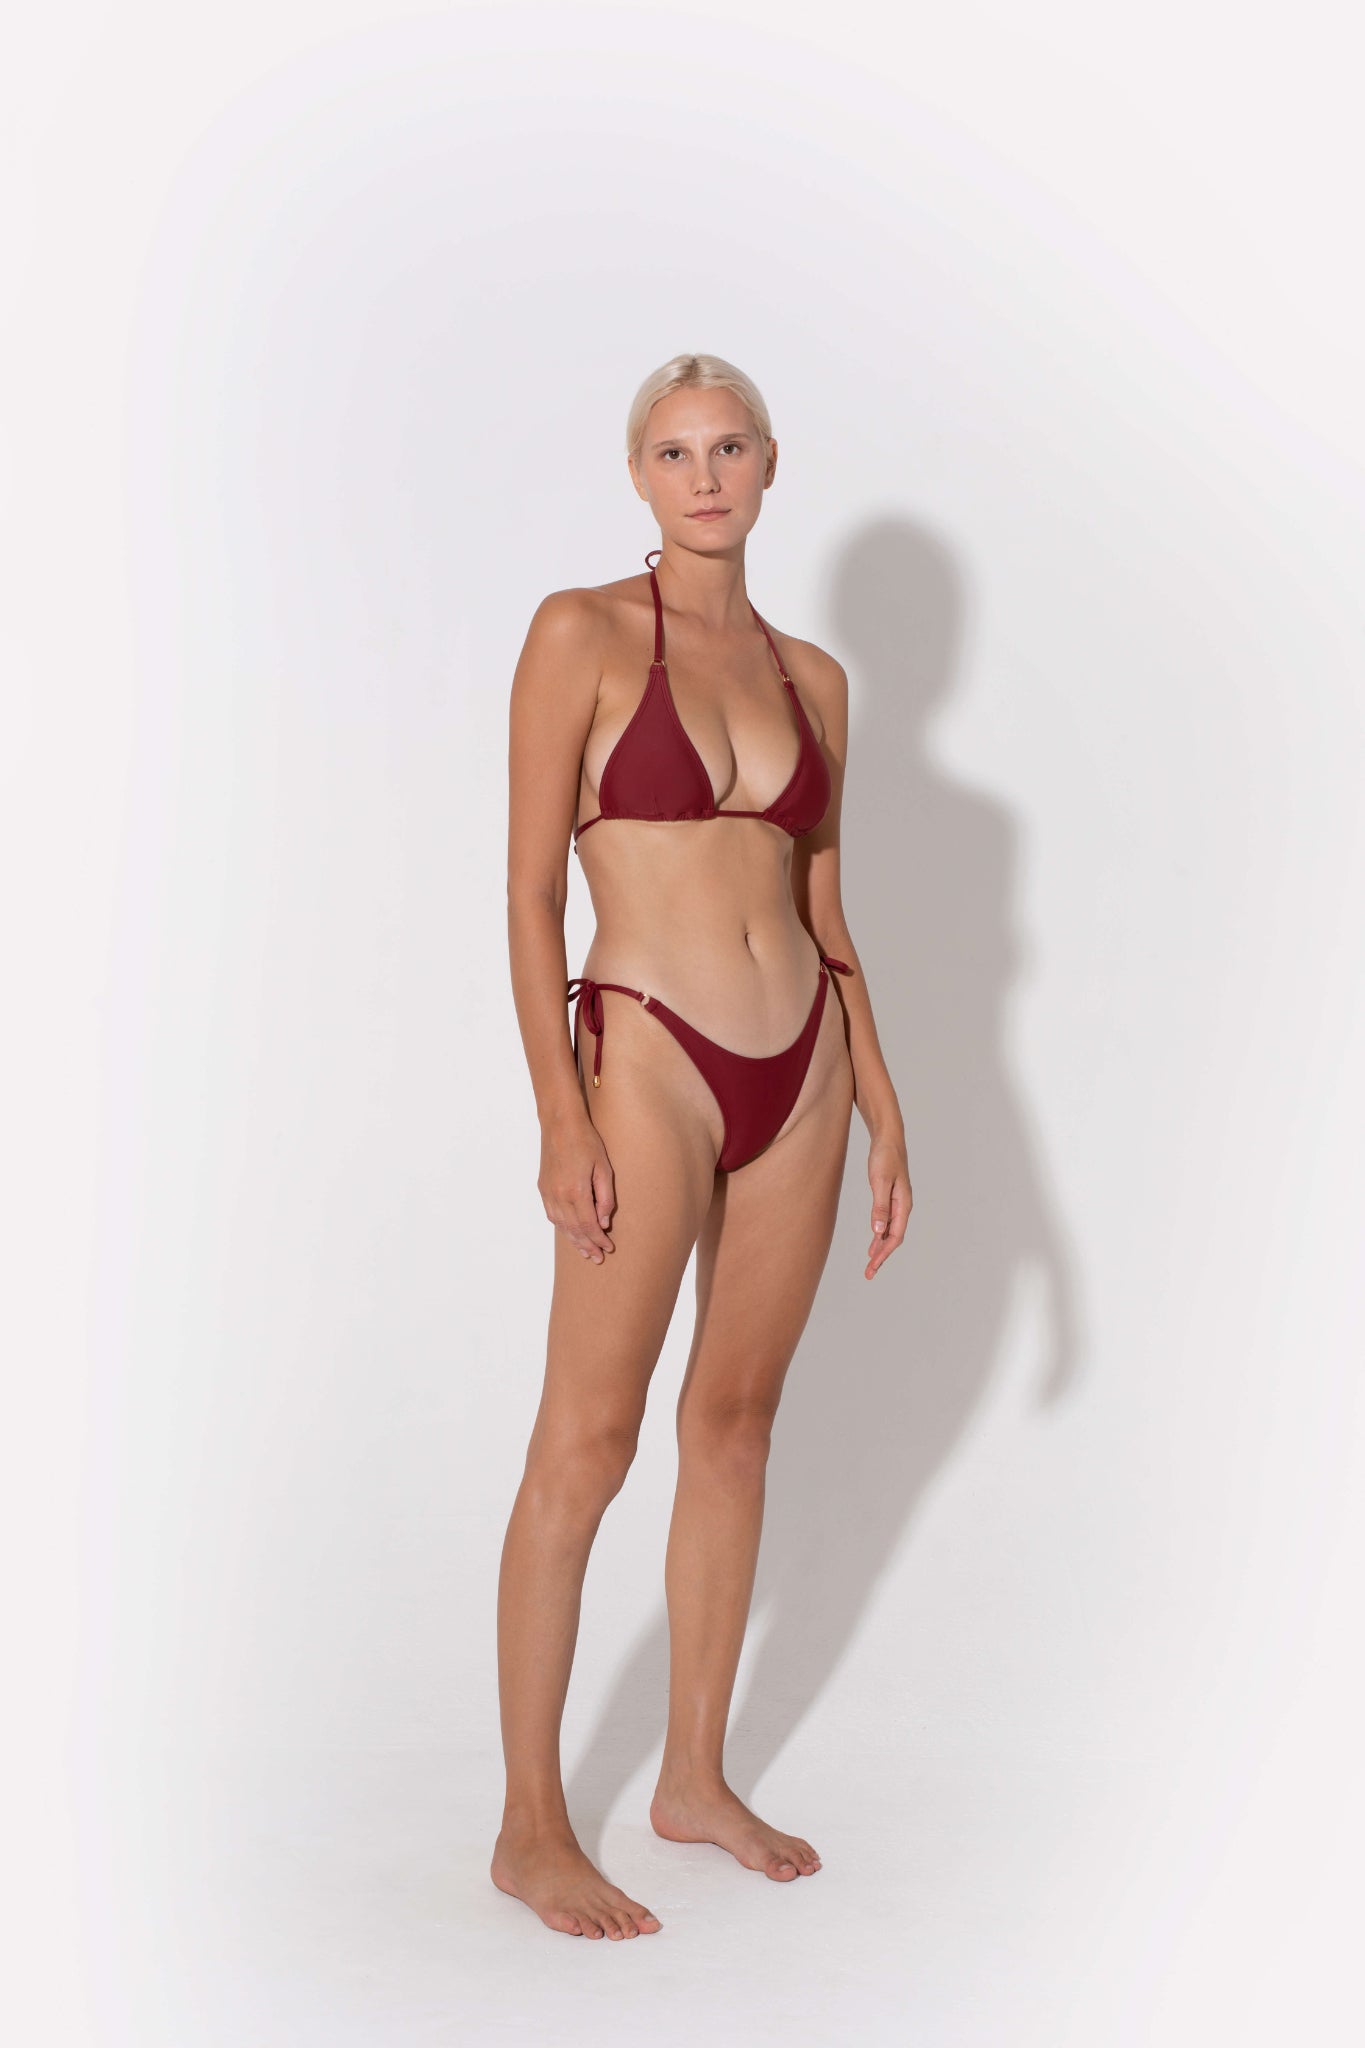 dark red color bikini, comfortable and easy to tan